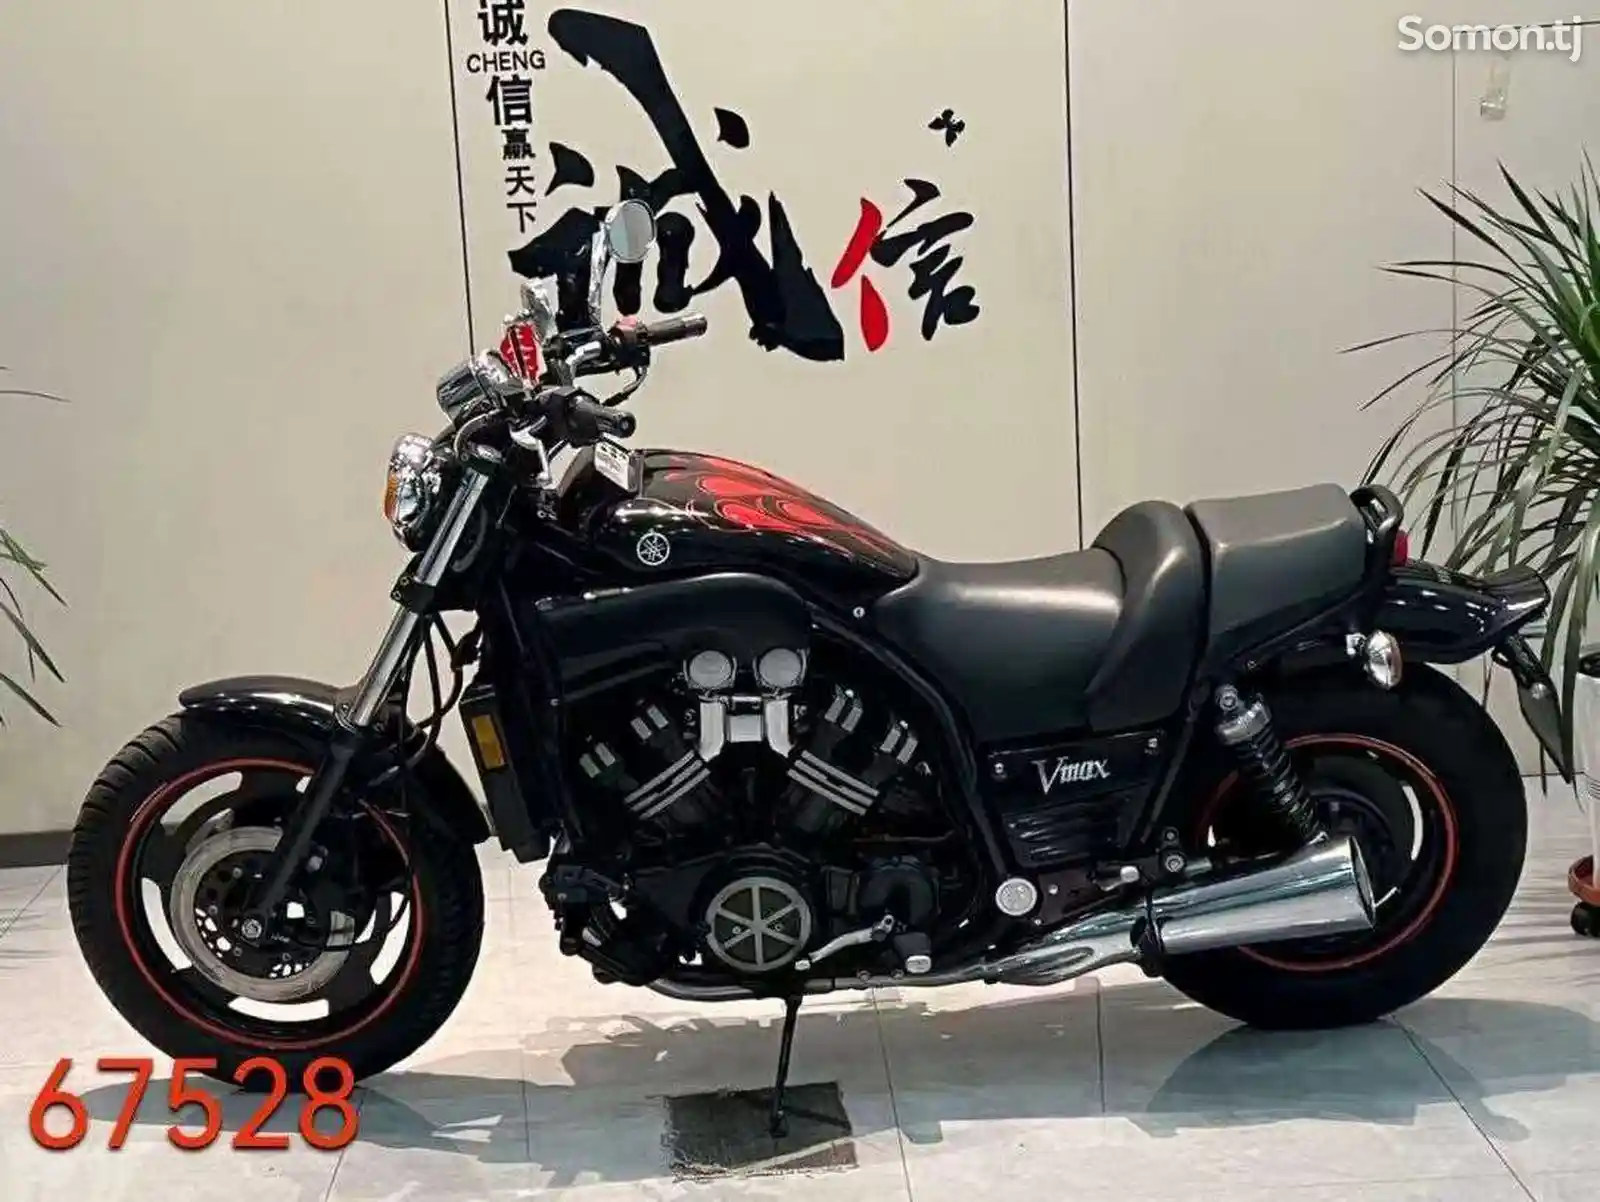 Мотоцикл Yamaha VMax 1200cc на заказ-2